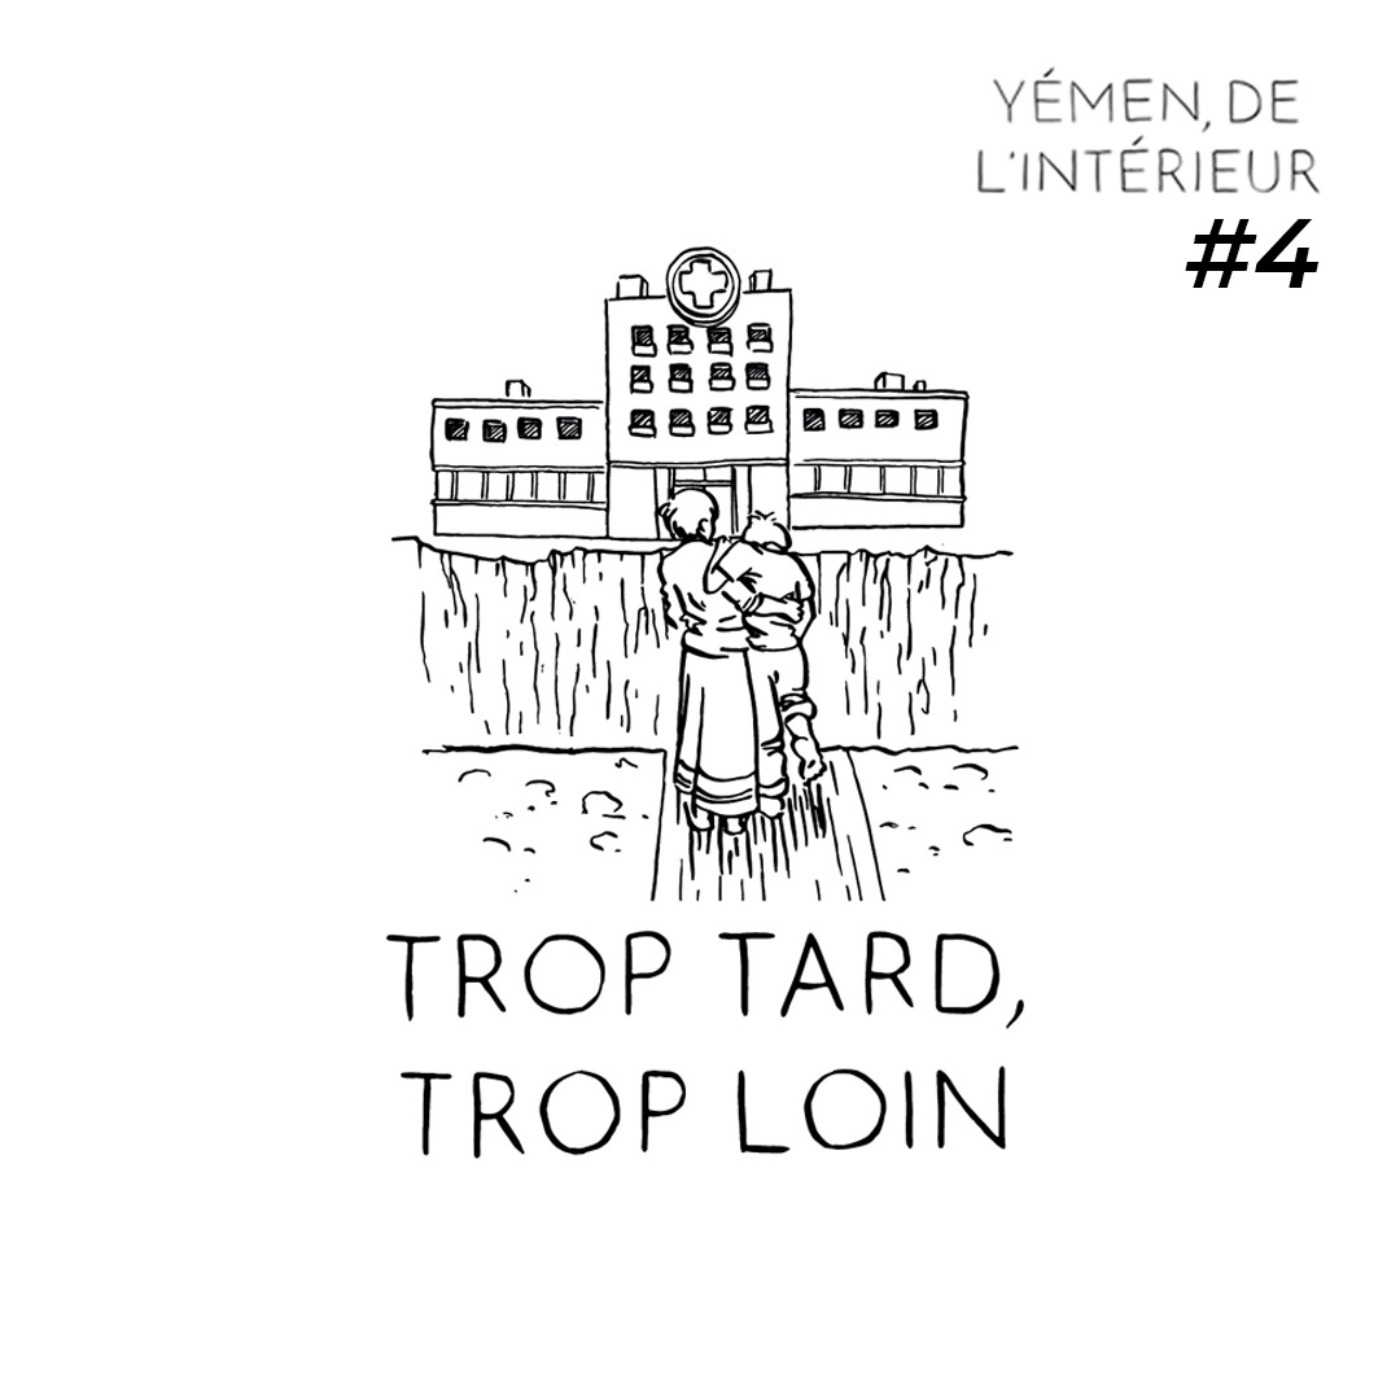 cover art for YEMEN, DE L’INTERIEUR #4 Trop tard, trop loin